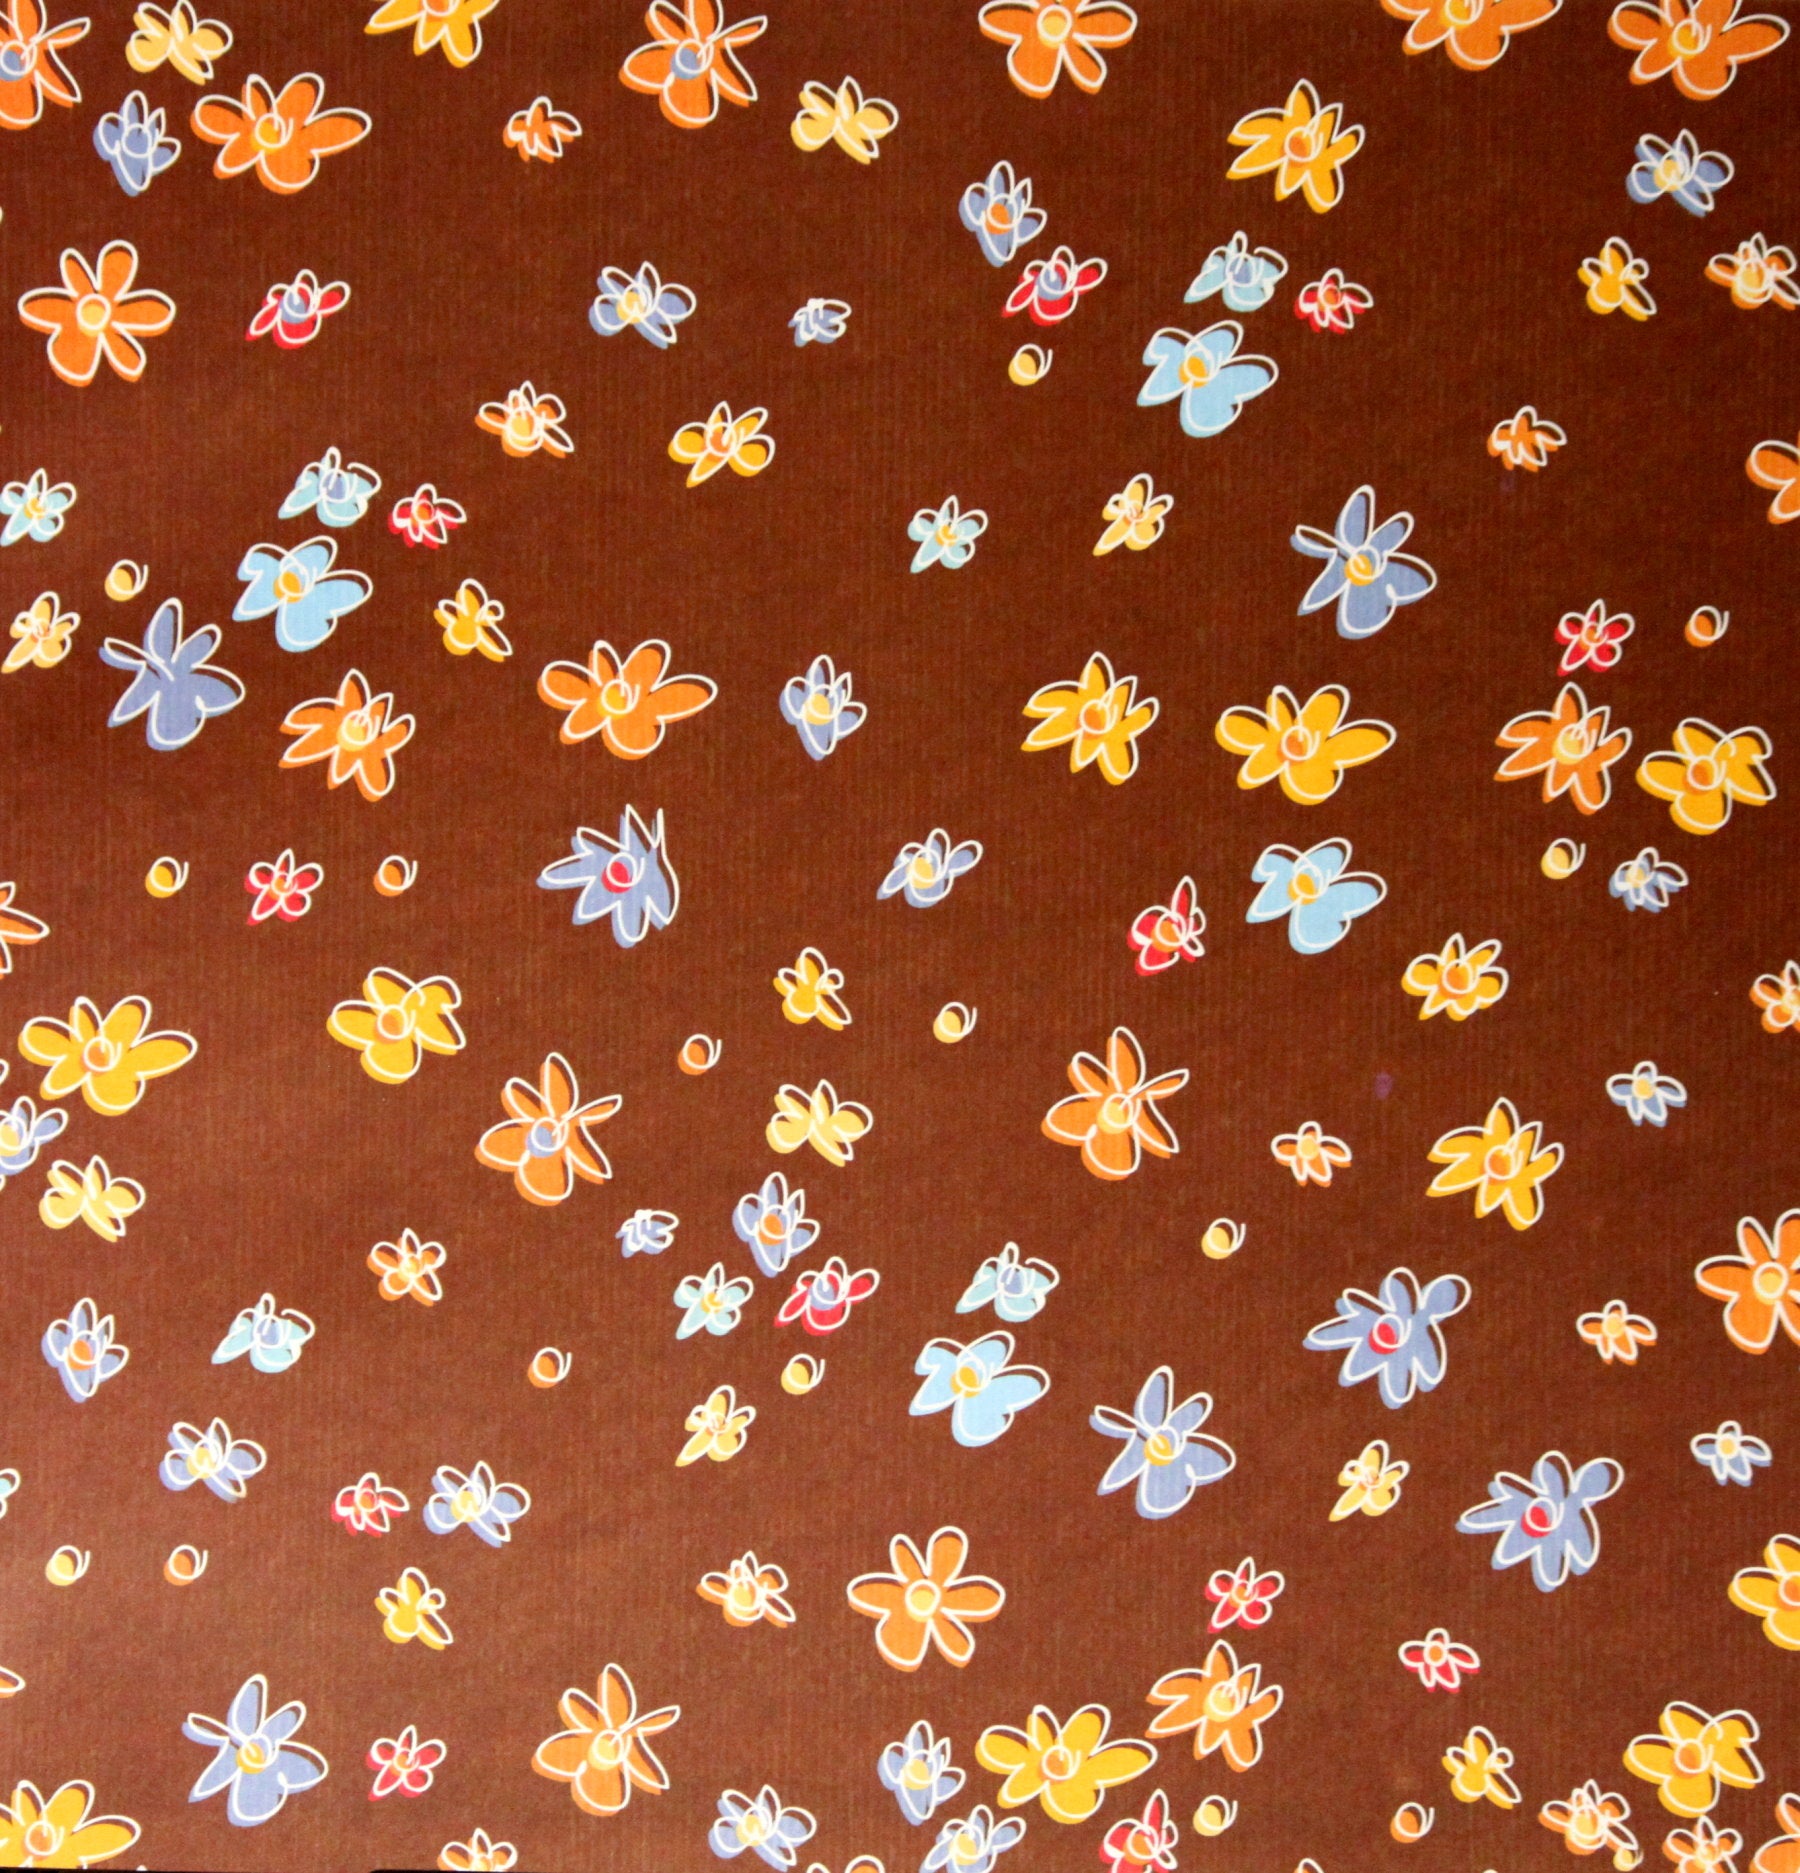 DCWV Fall Flowers 12 x 12 Scrapbook Paper